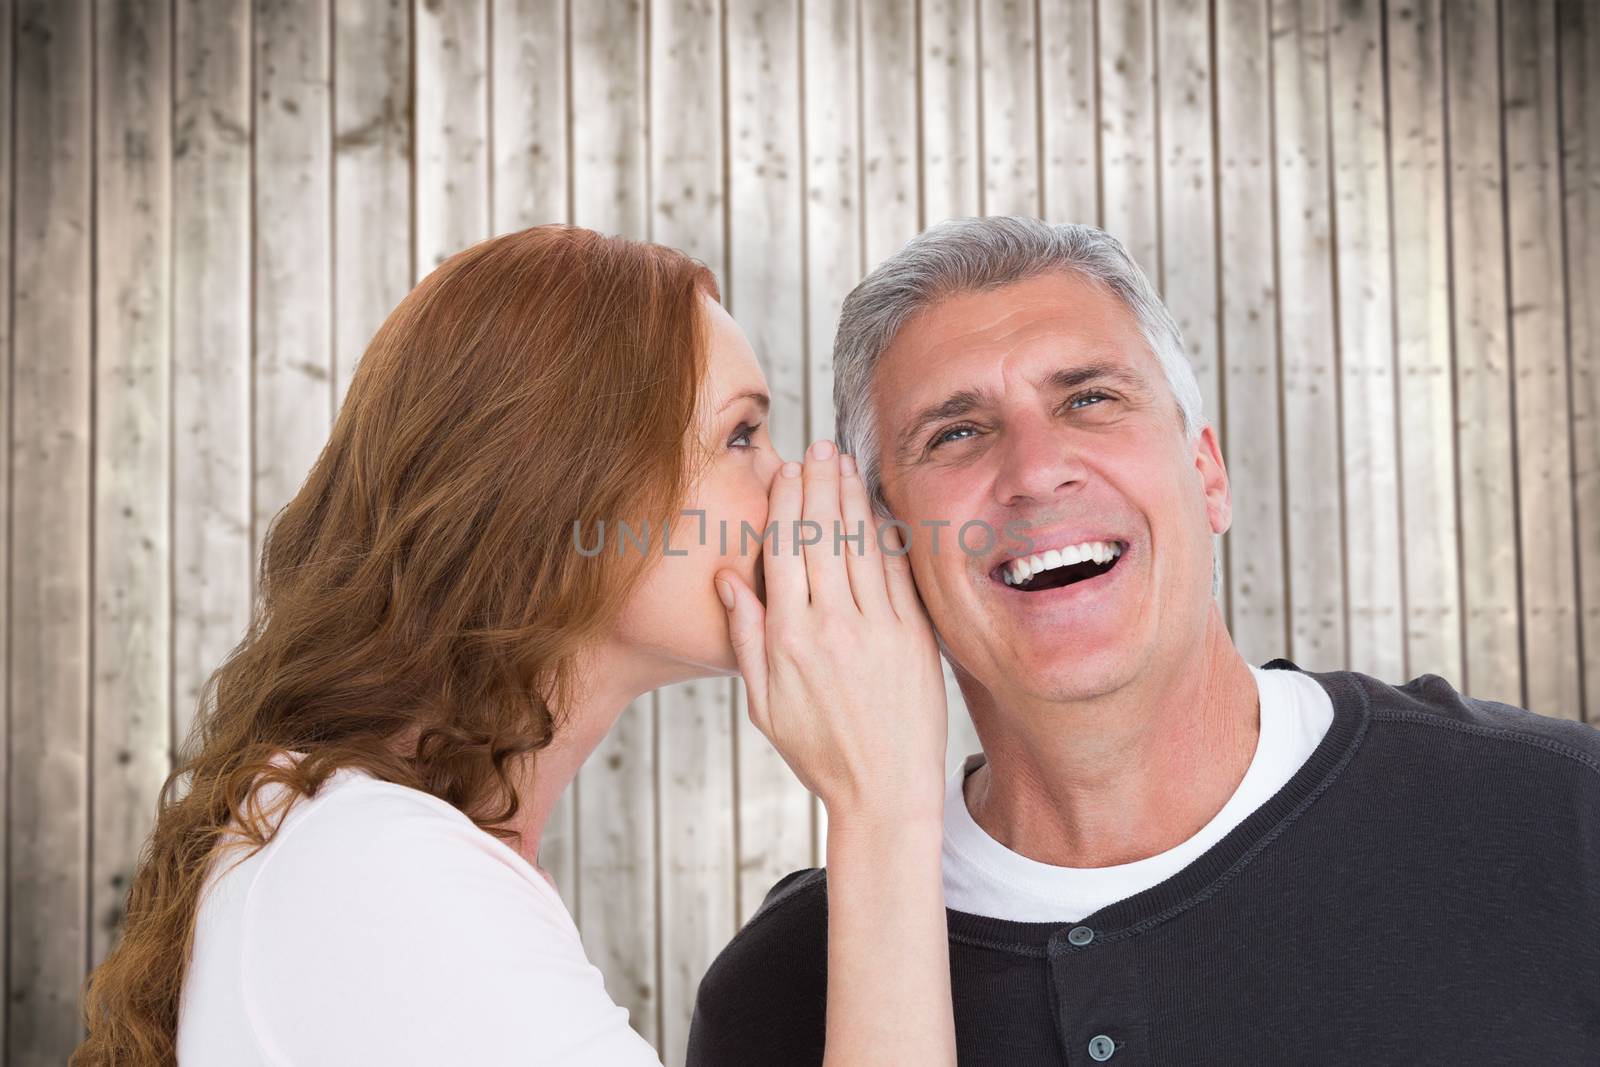 Woman telling secret to her partner against wooden planks background